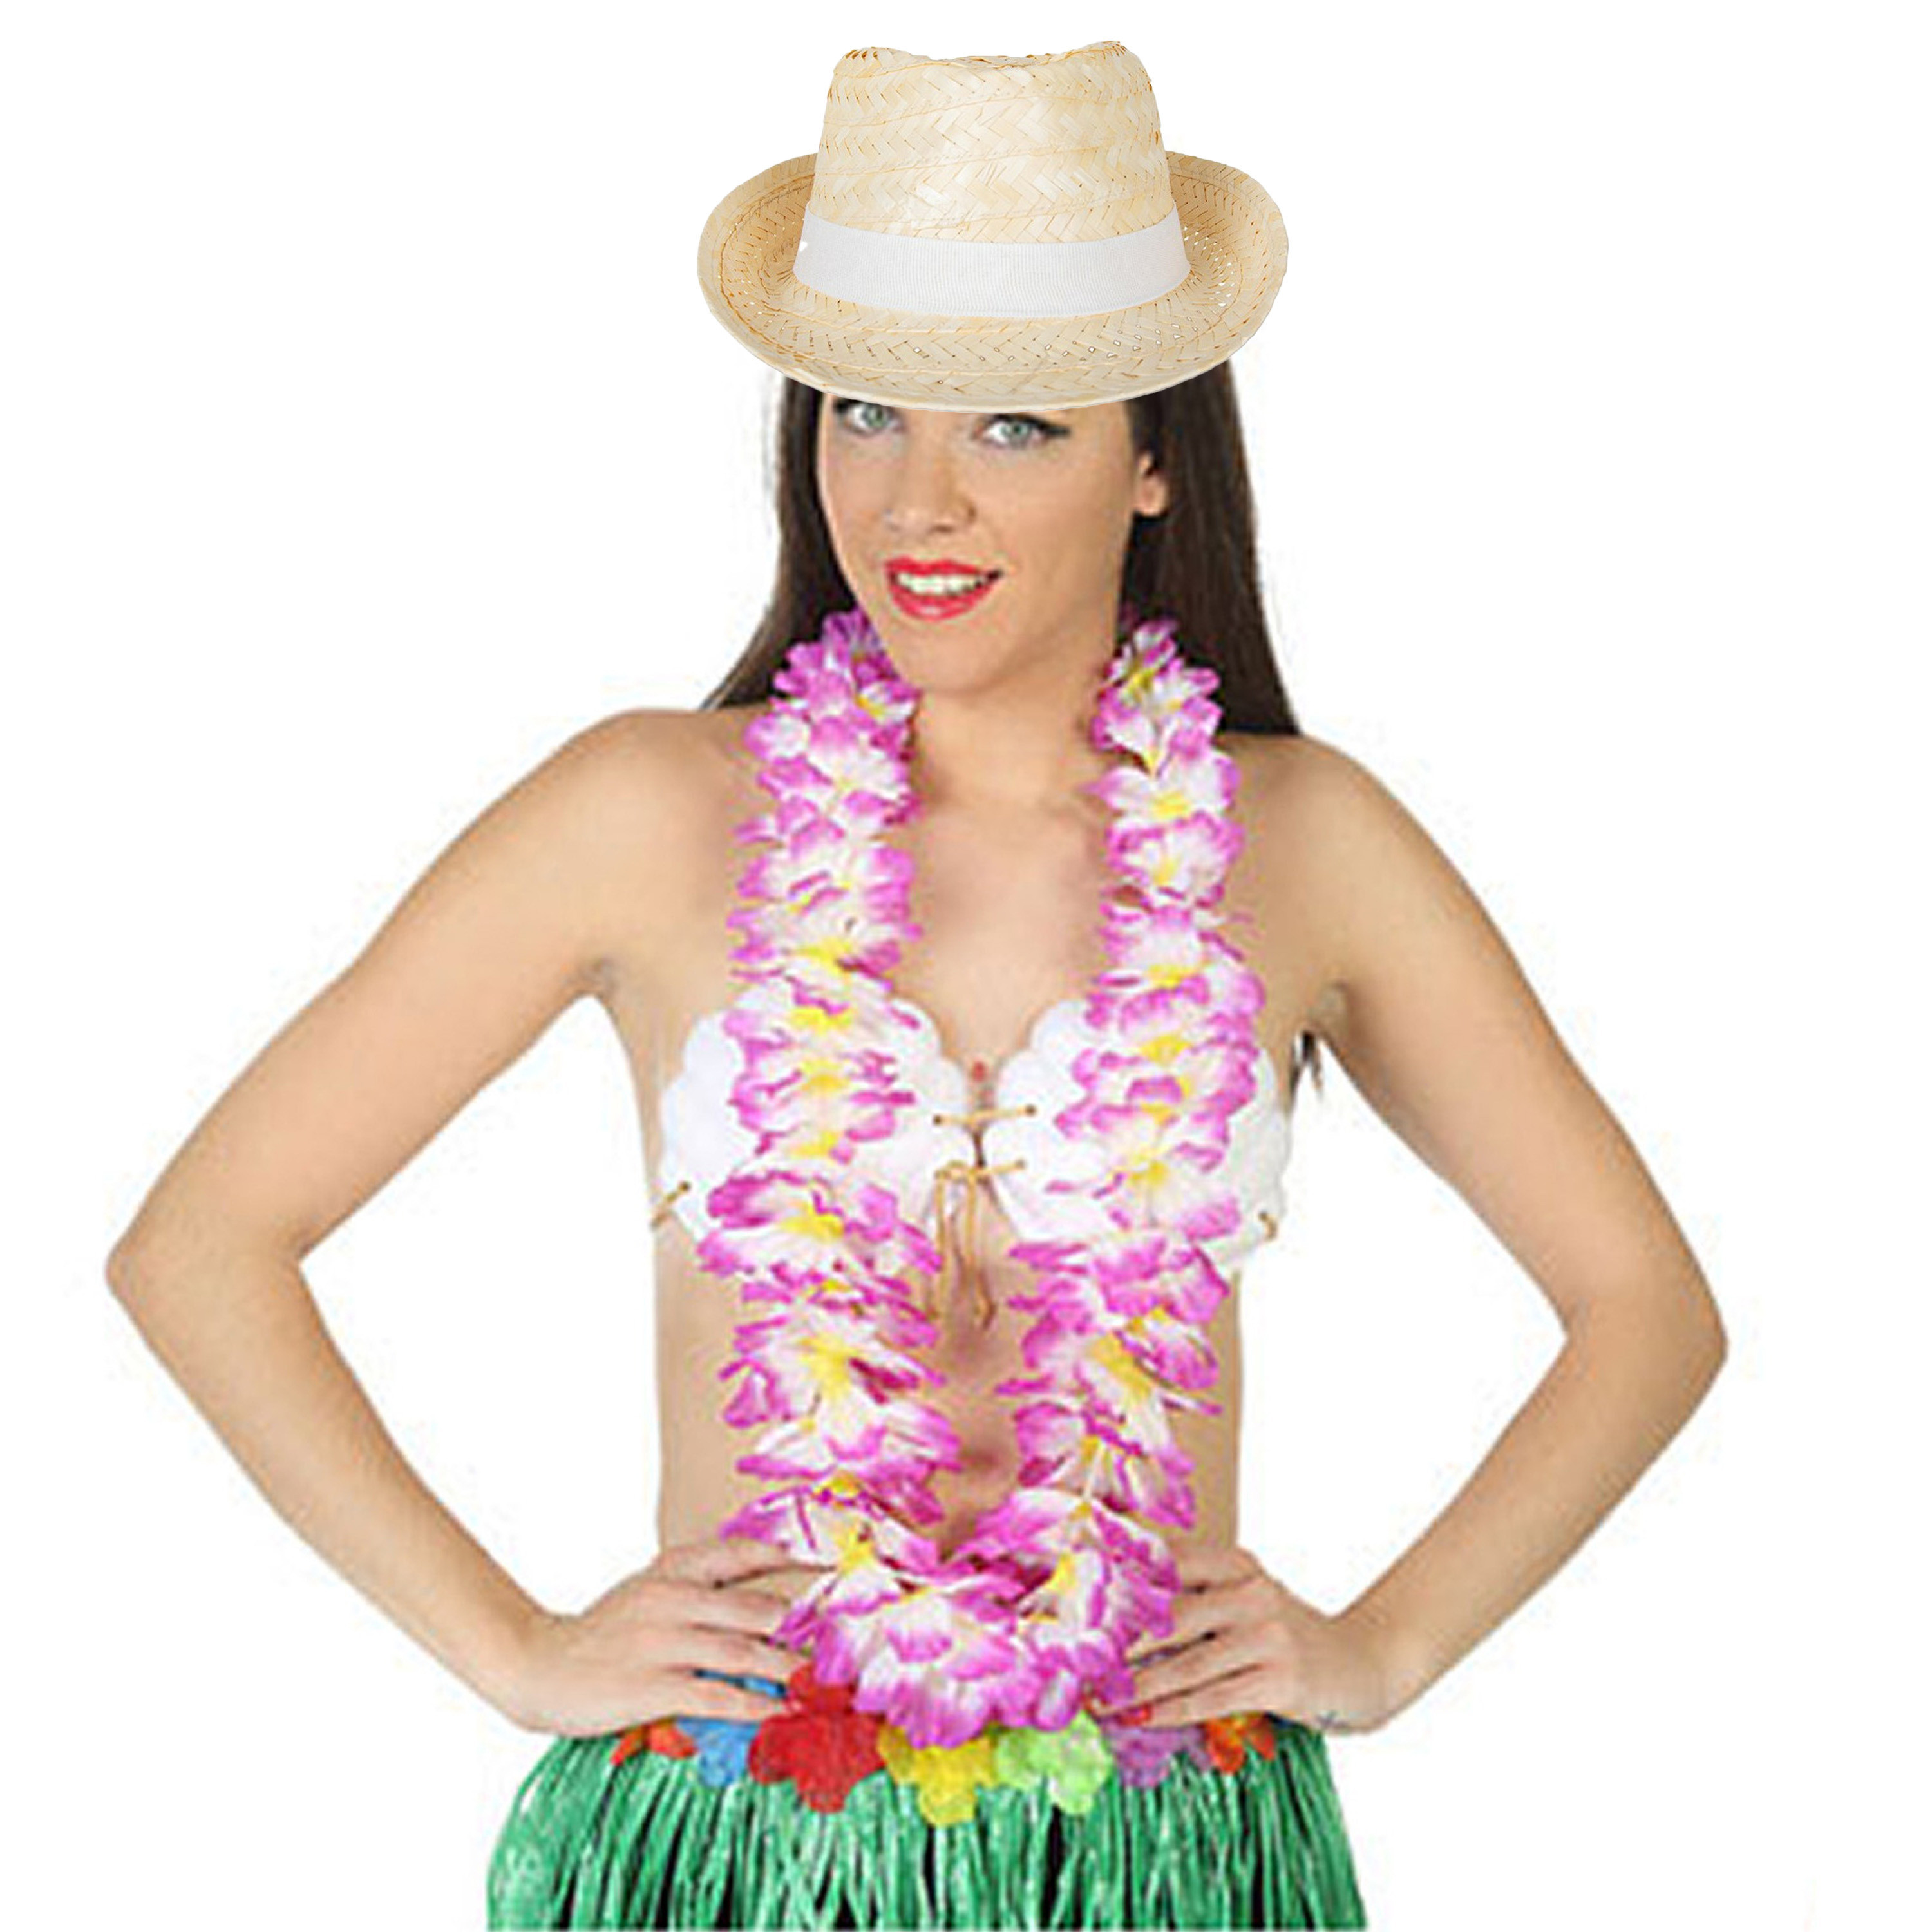 Hawaii thema party verkleedset - Strand strohoedje - bloemenkrans paars/wit - Tropical toppers